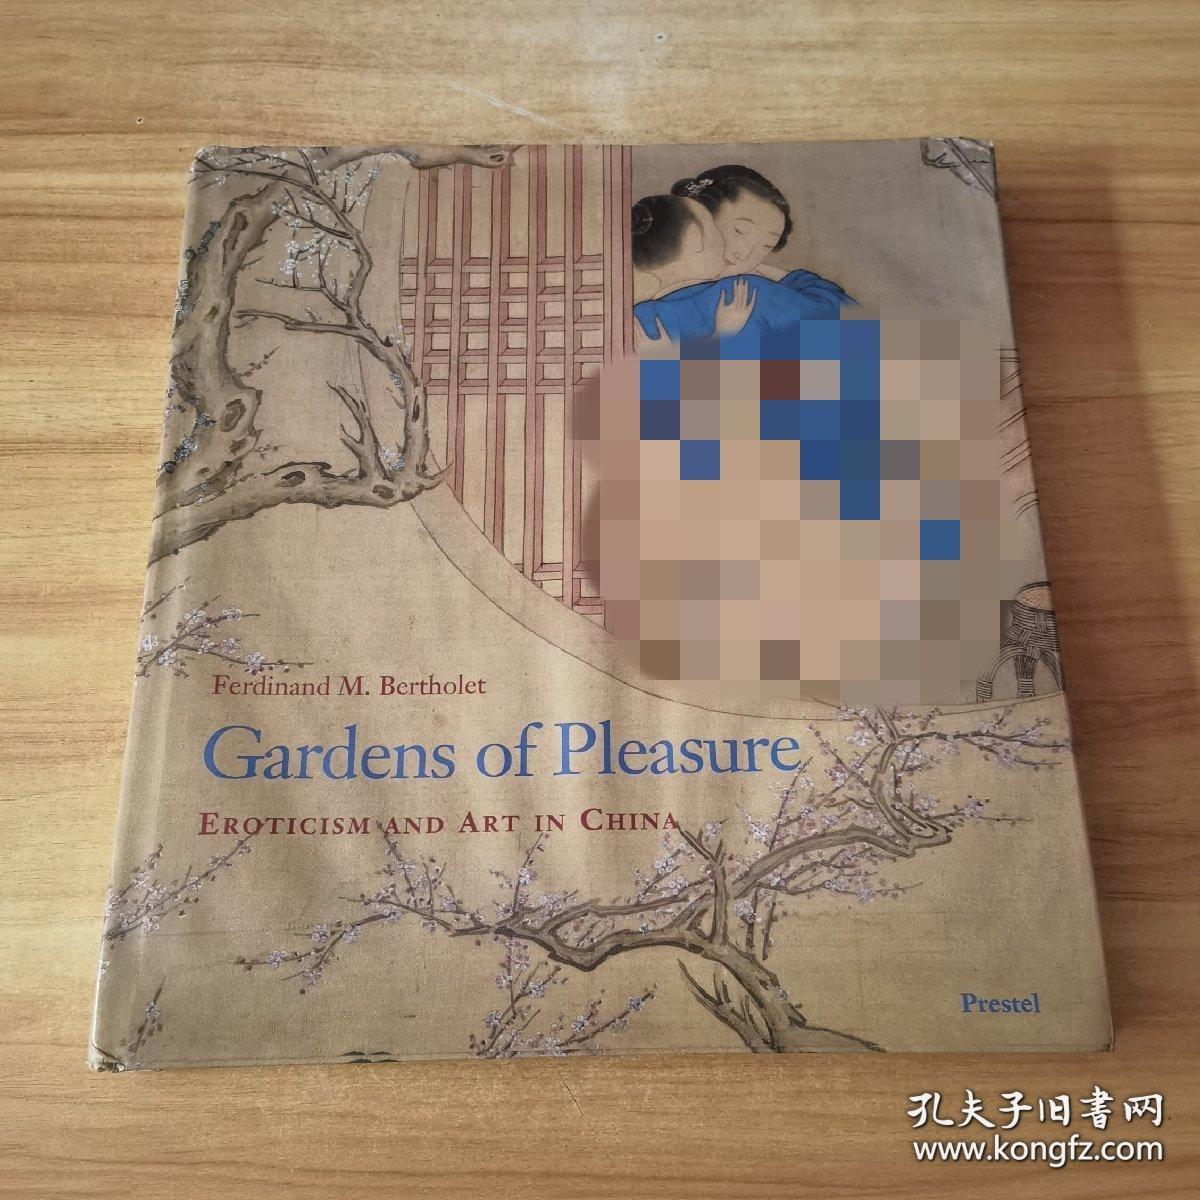 Gardens of Pleasure: Eroticism and Art in China